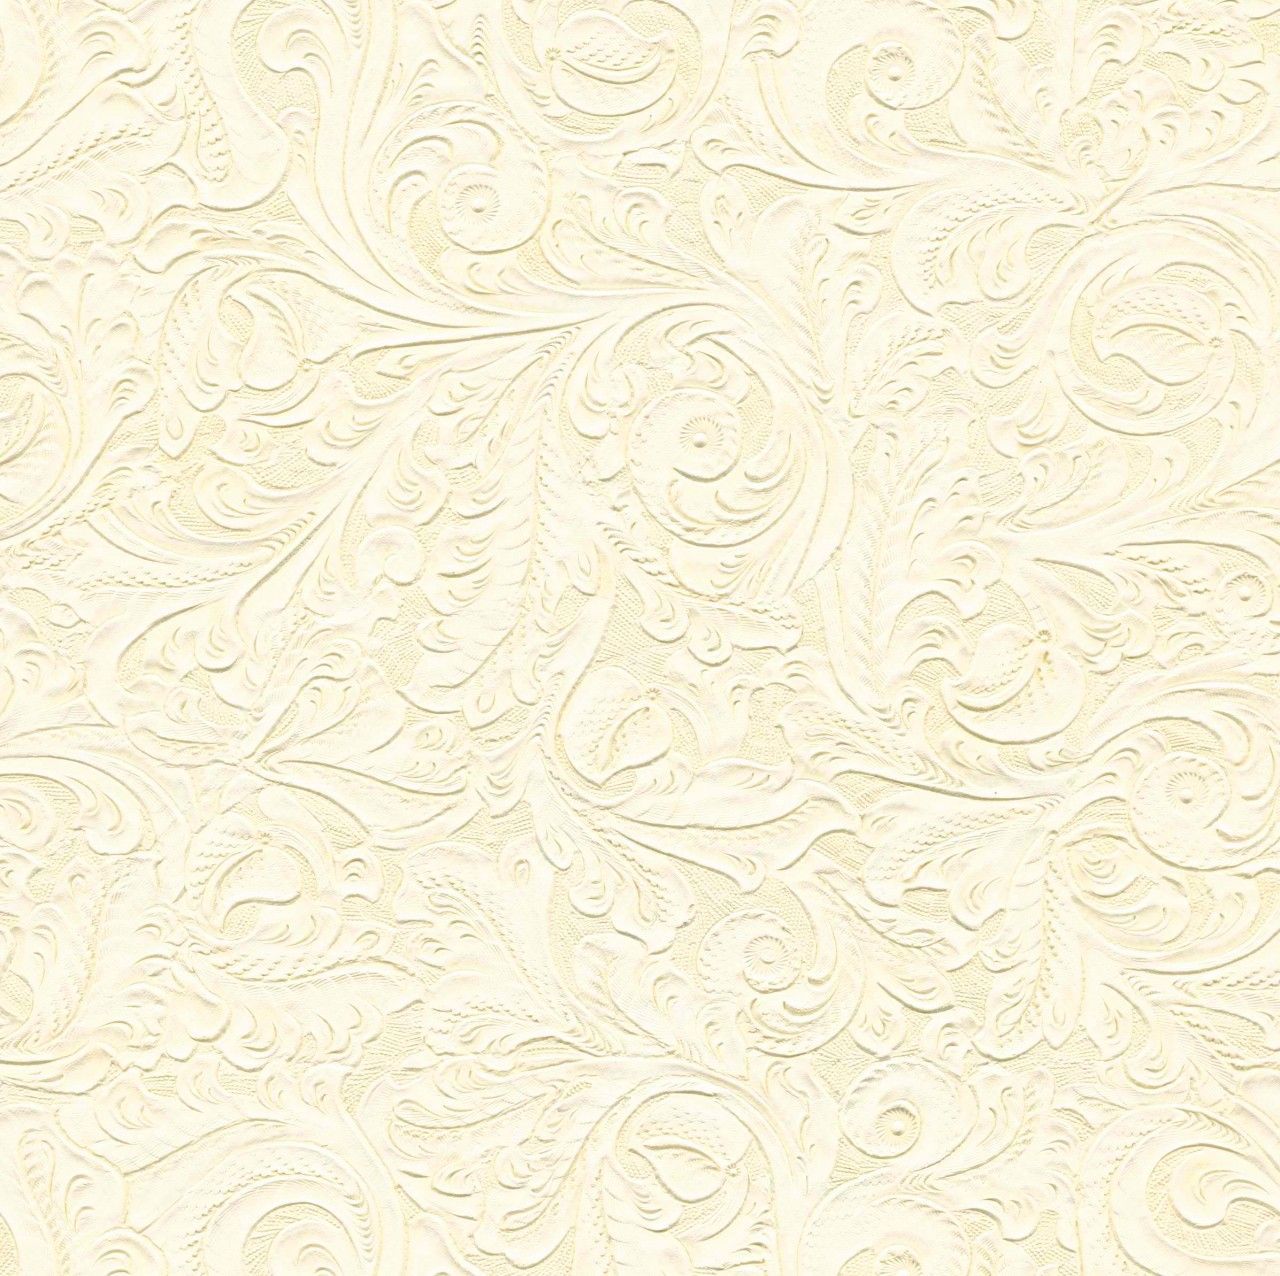 Striped Wallpaper for MultiPurpose 1005x53 cm Cream in Color 58 sqft   Amazonin